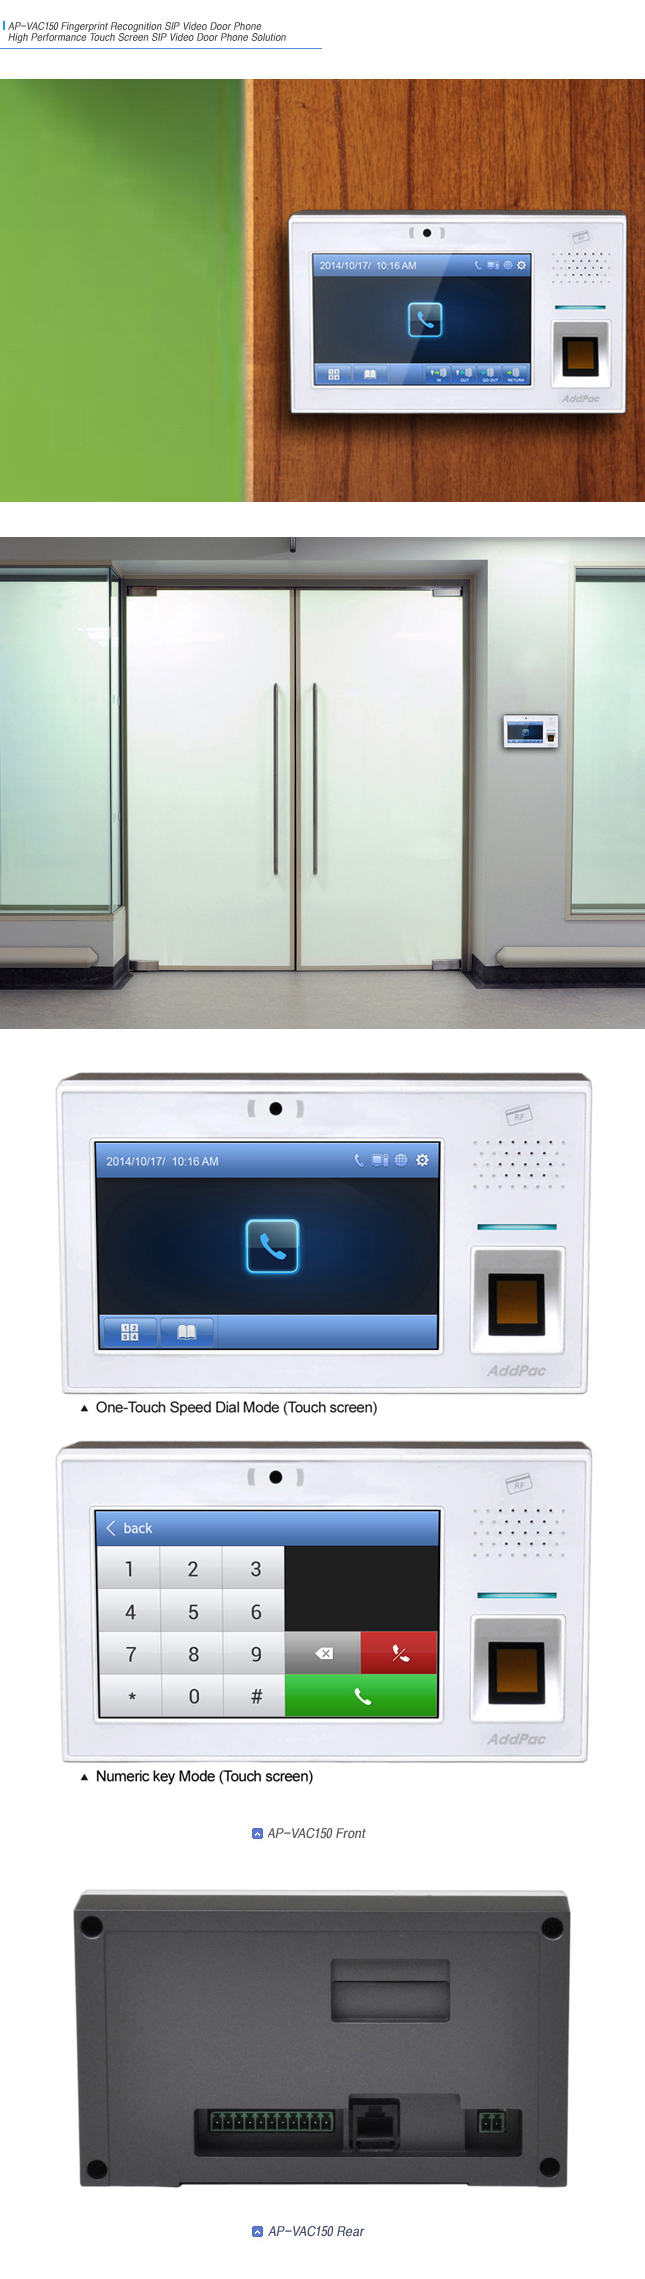 AP-VAC150 IP Video Door Phone (touch screen) | AddPac